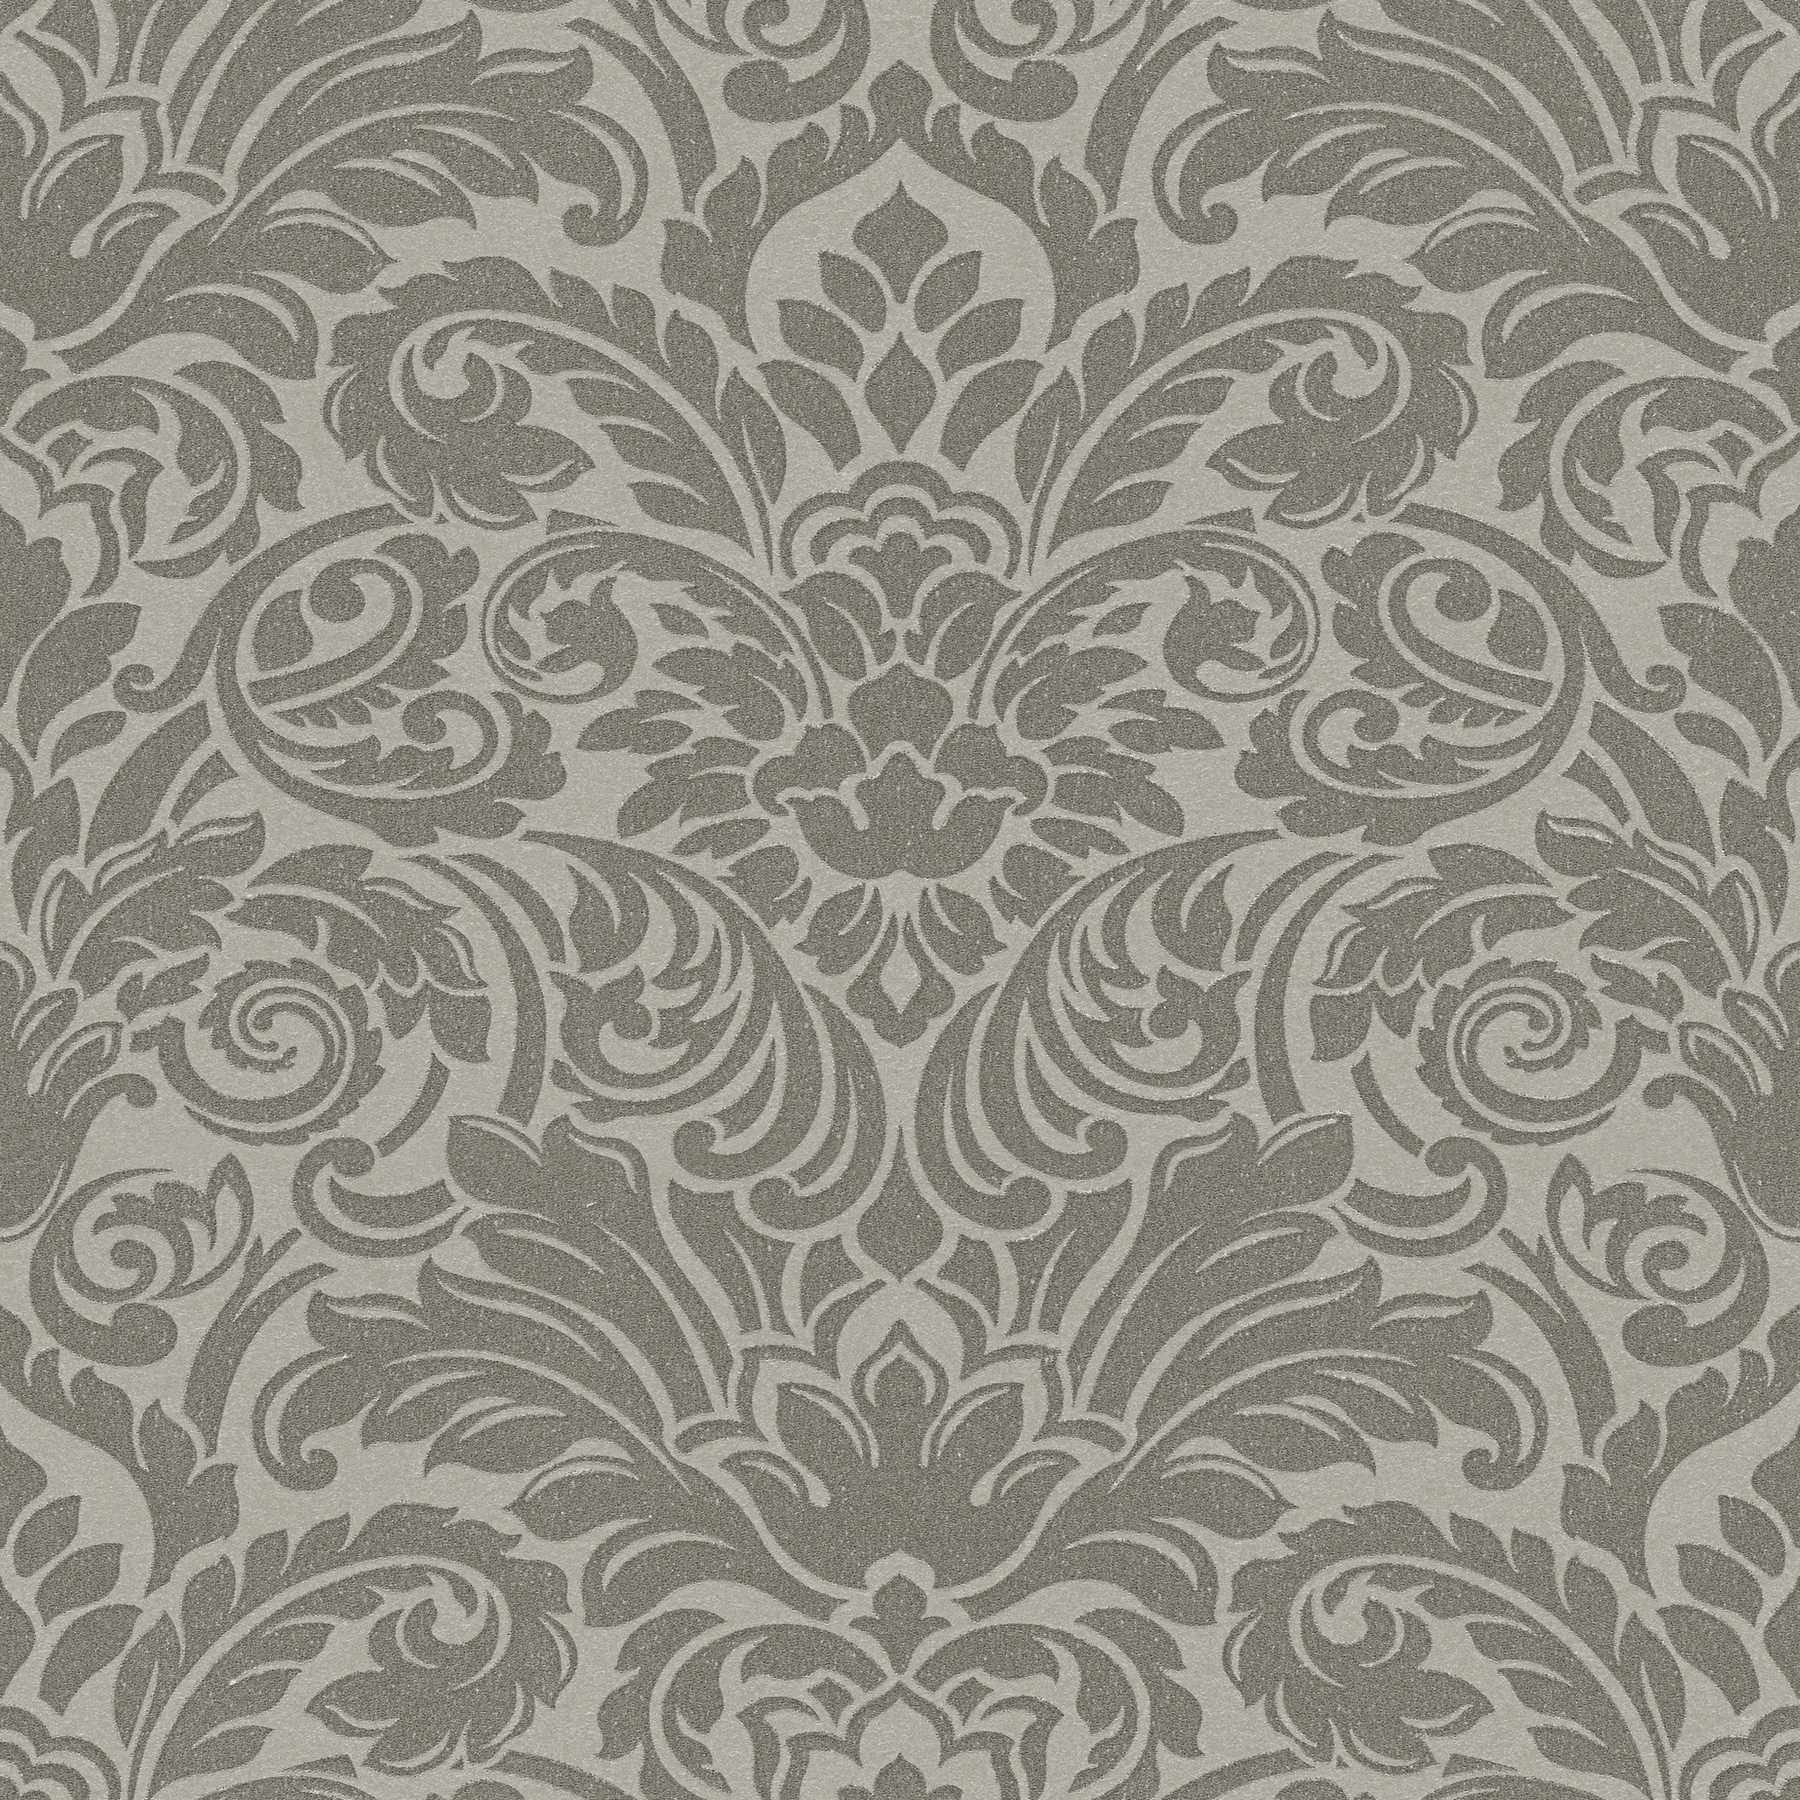 Ornamenttapete Metallic-Effekt & florales Design – Silber, Grau
